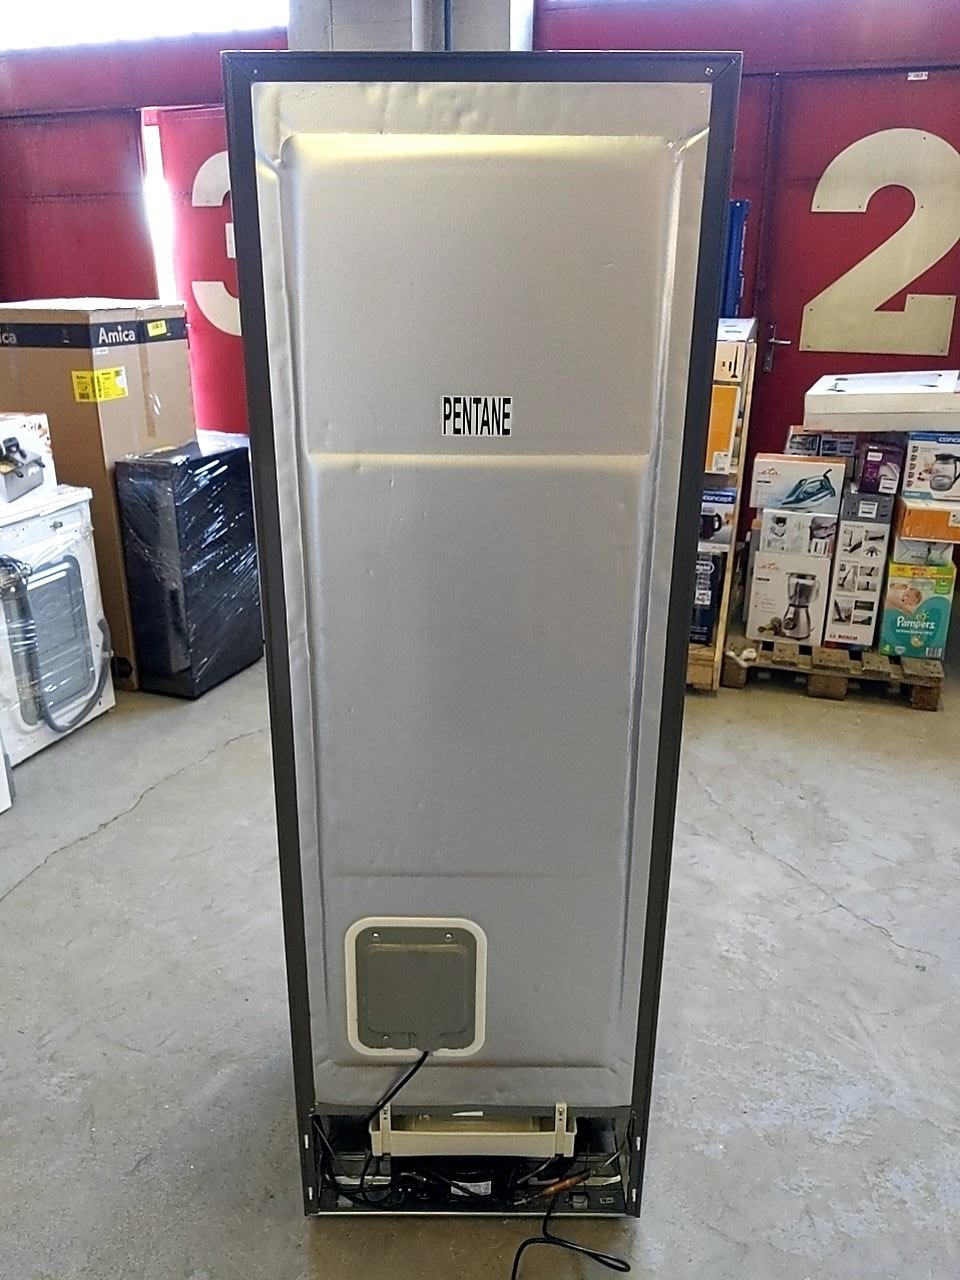 Kombinovaná chladnička Gorenje N6A2XL4